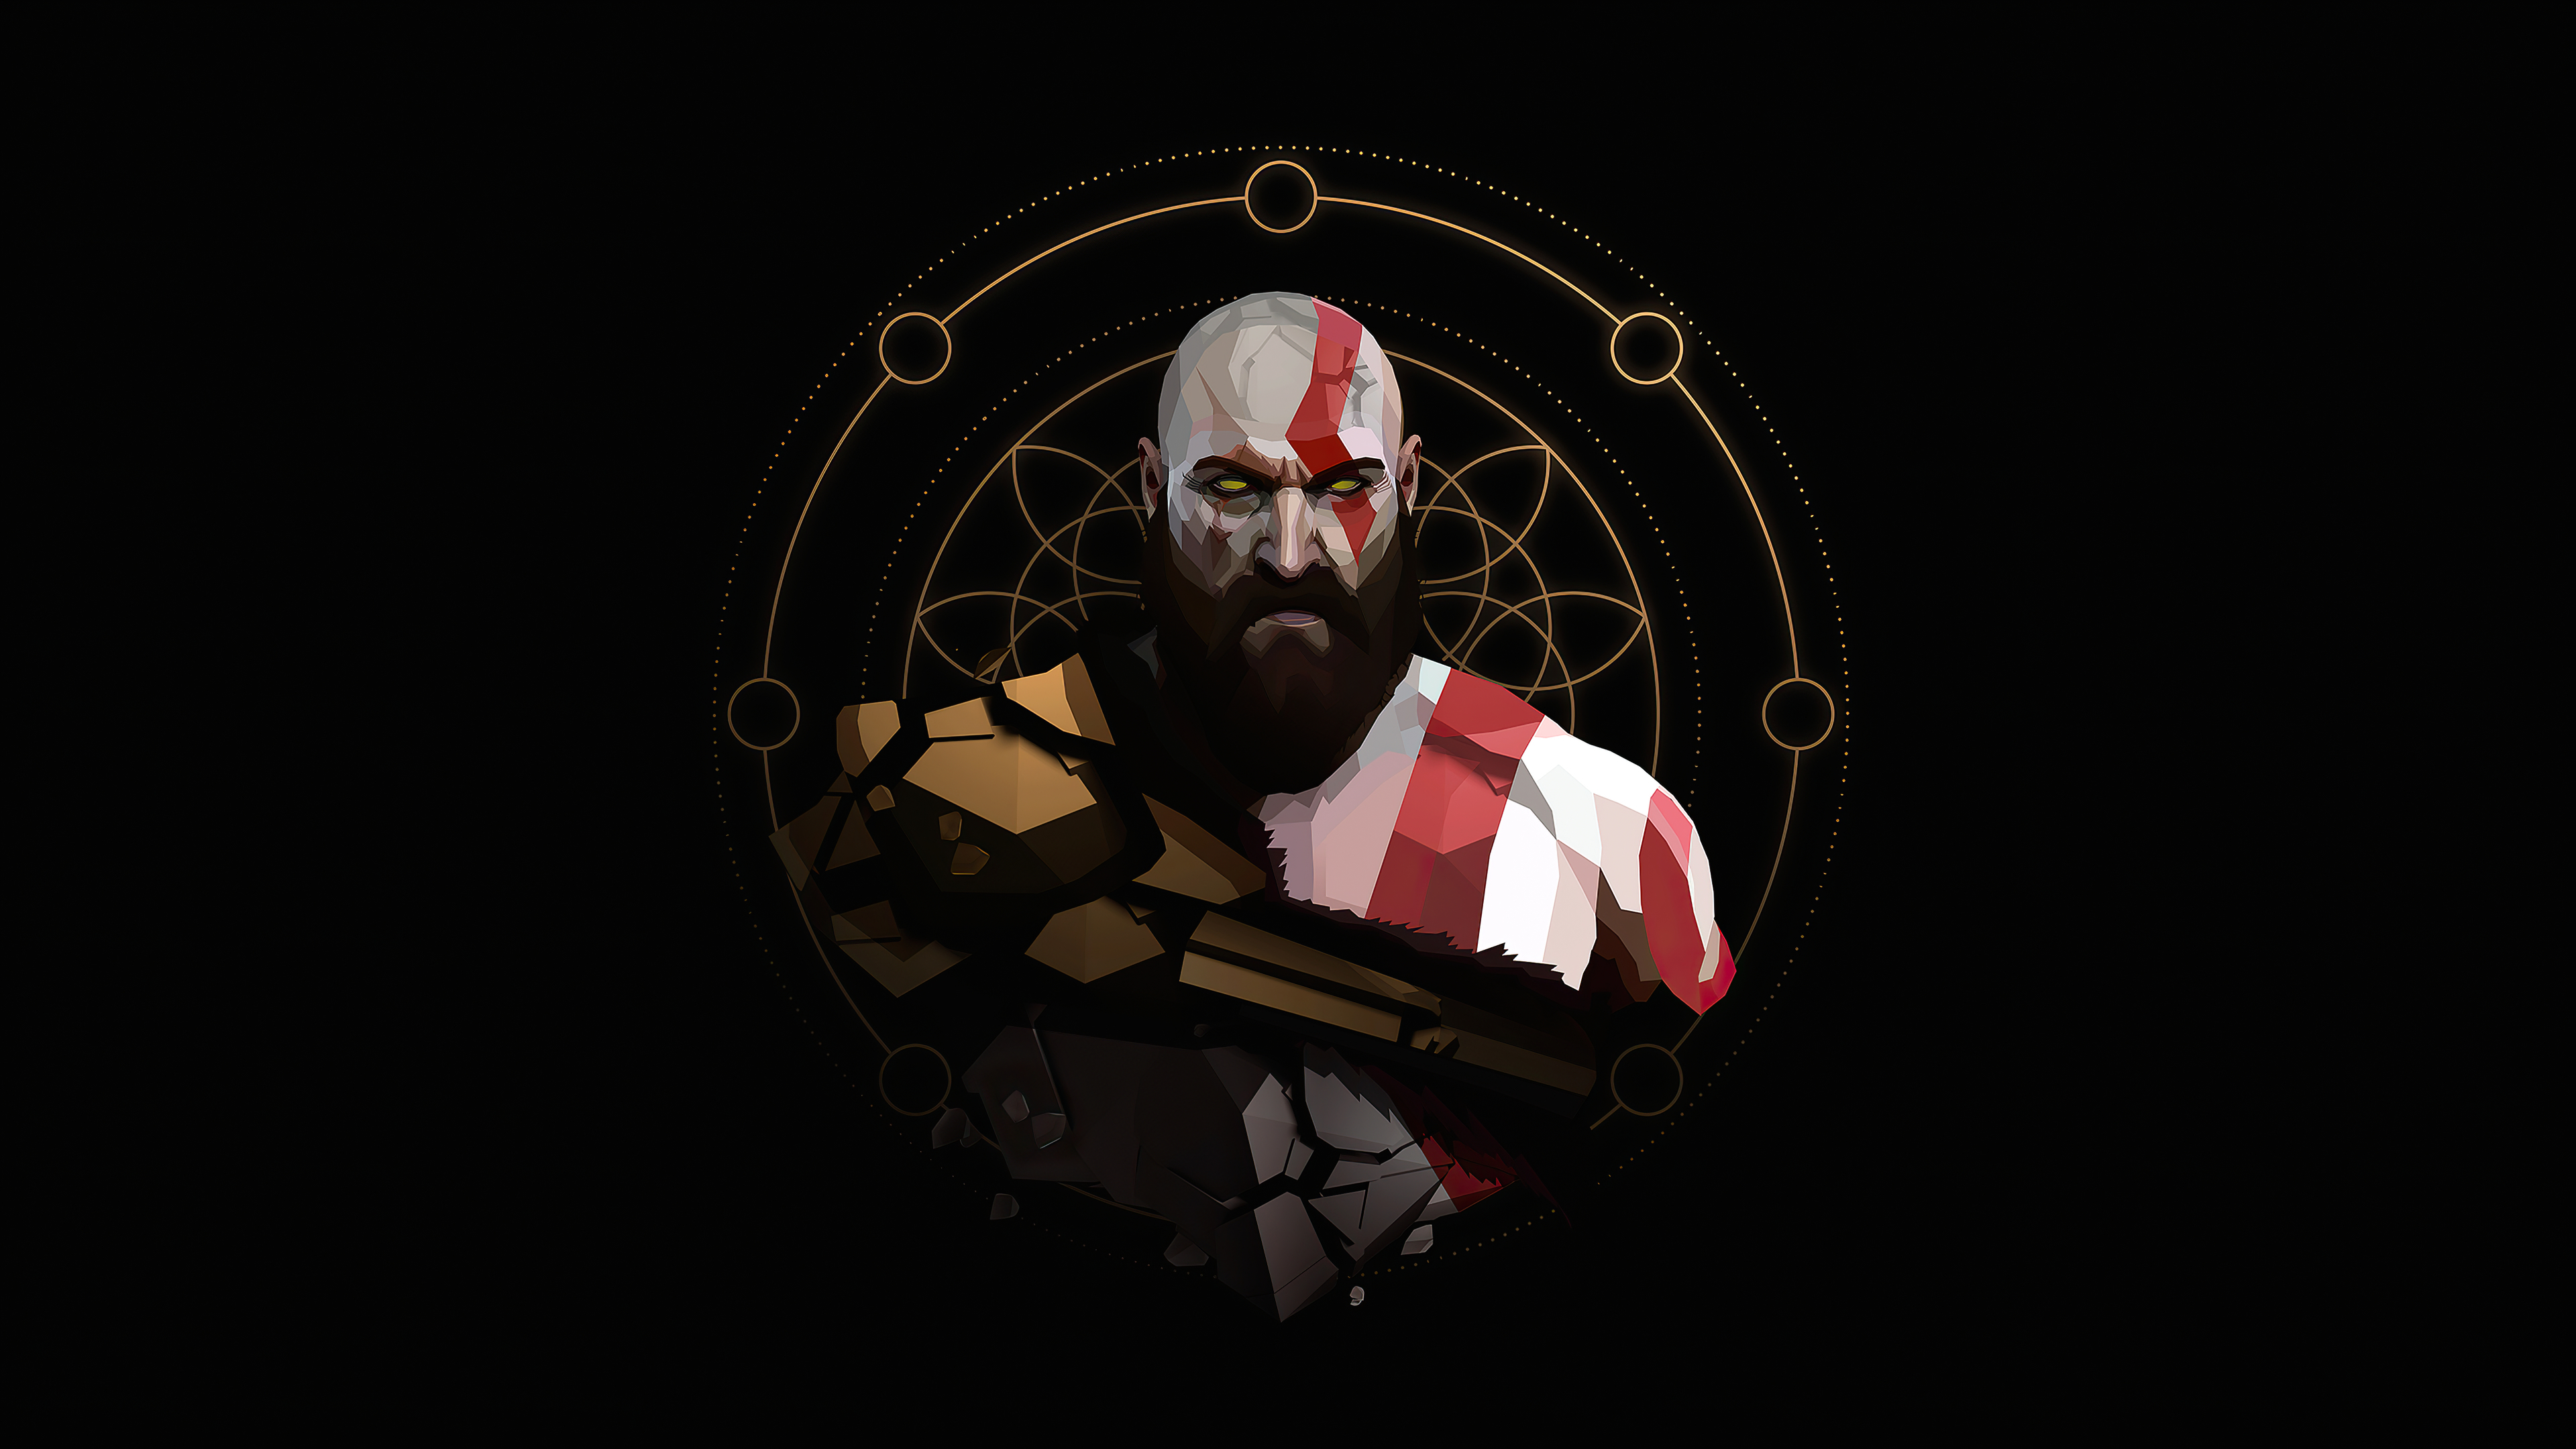 kratos-minimal-artwork-4k-i3.jpg